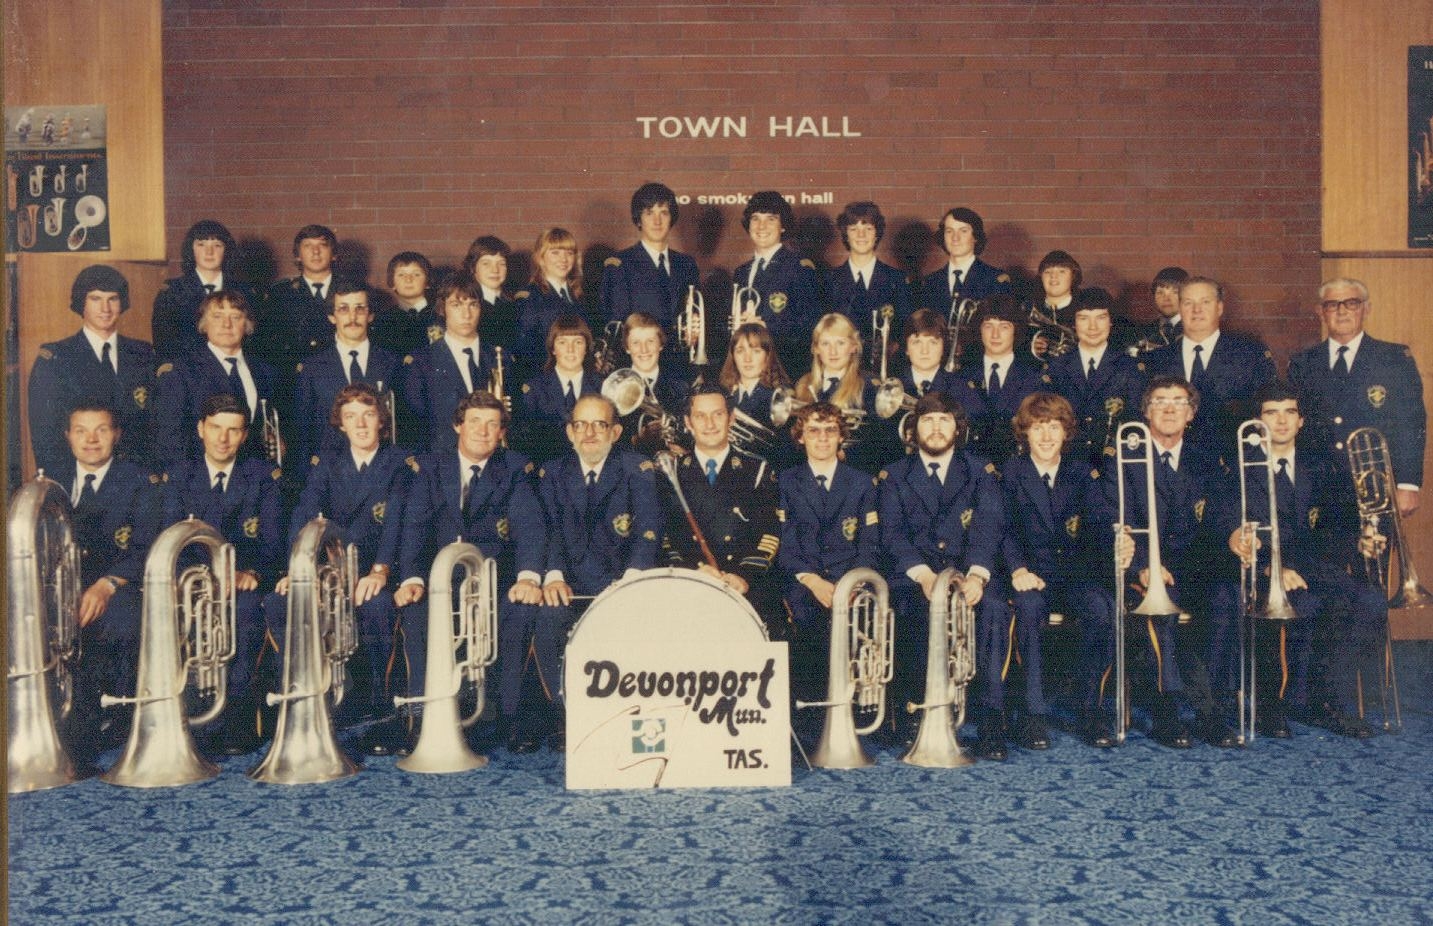 1981 National Championships, Band portrait